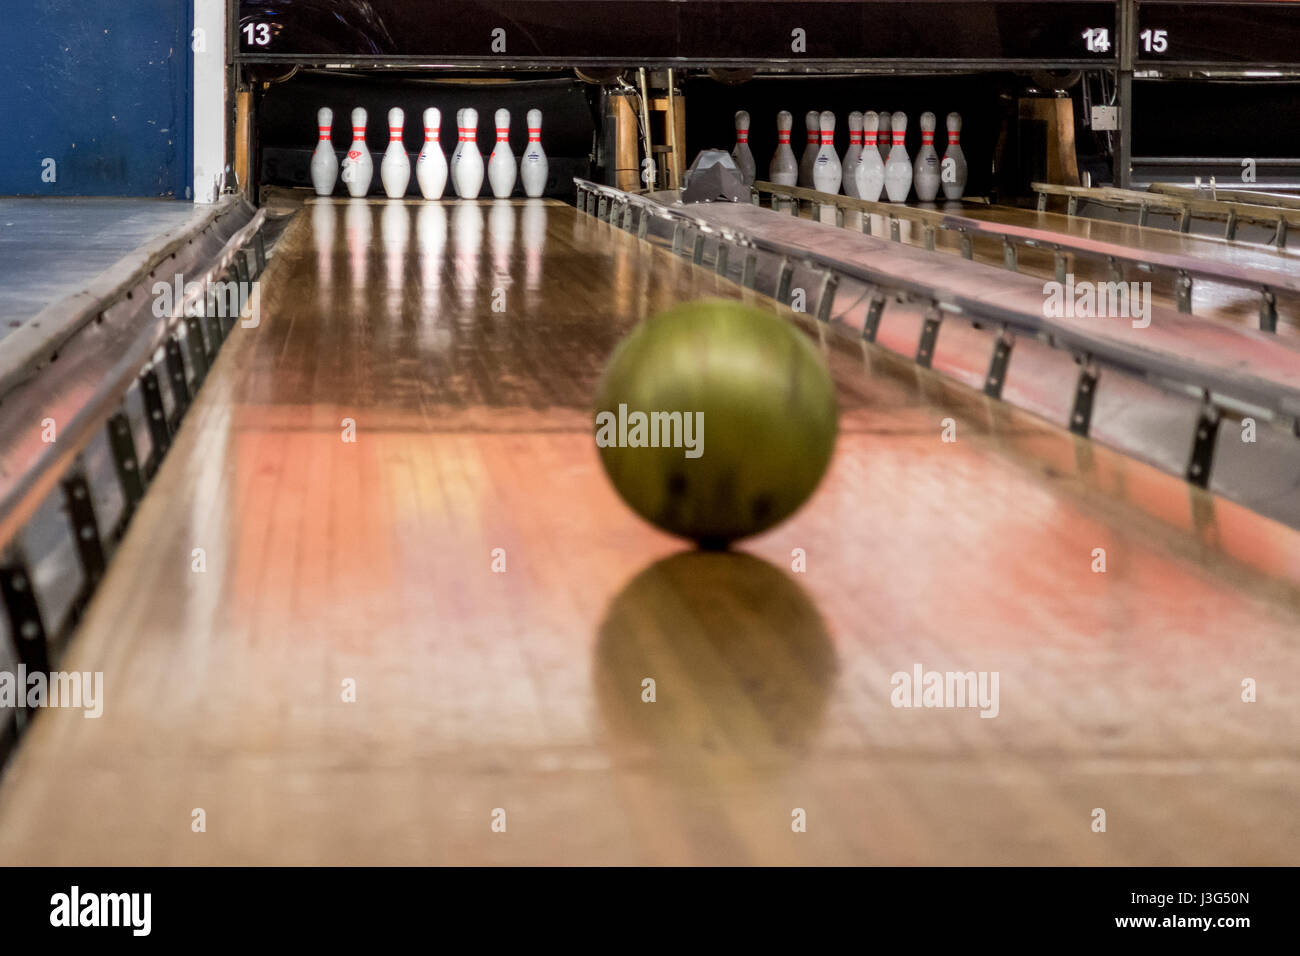 Bowlingbahn -Fotos und -Bildmaterial in hoher Auflösung – Alamy